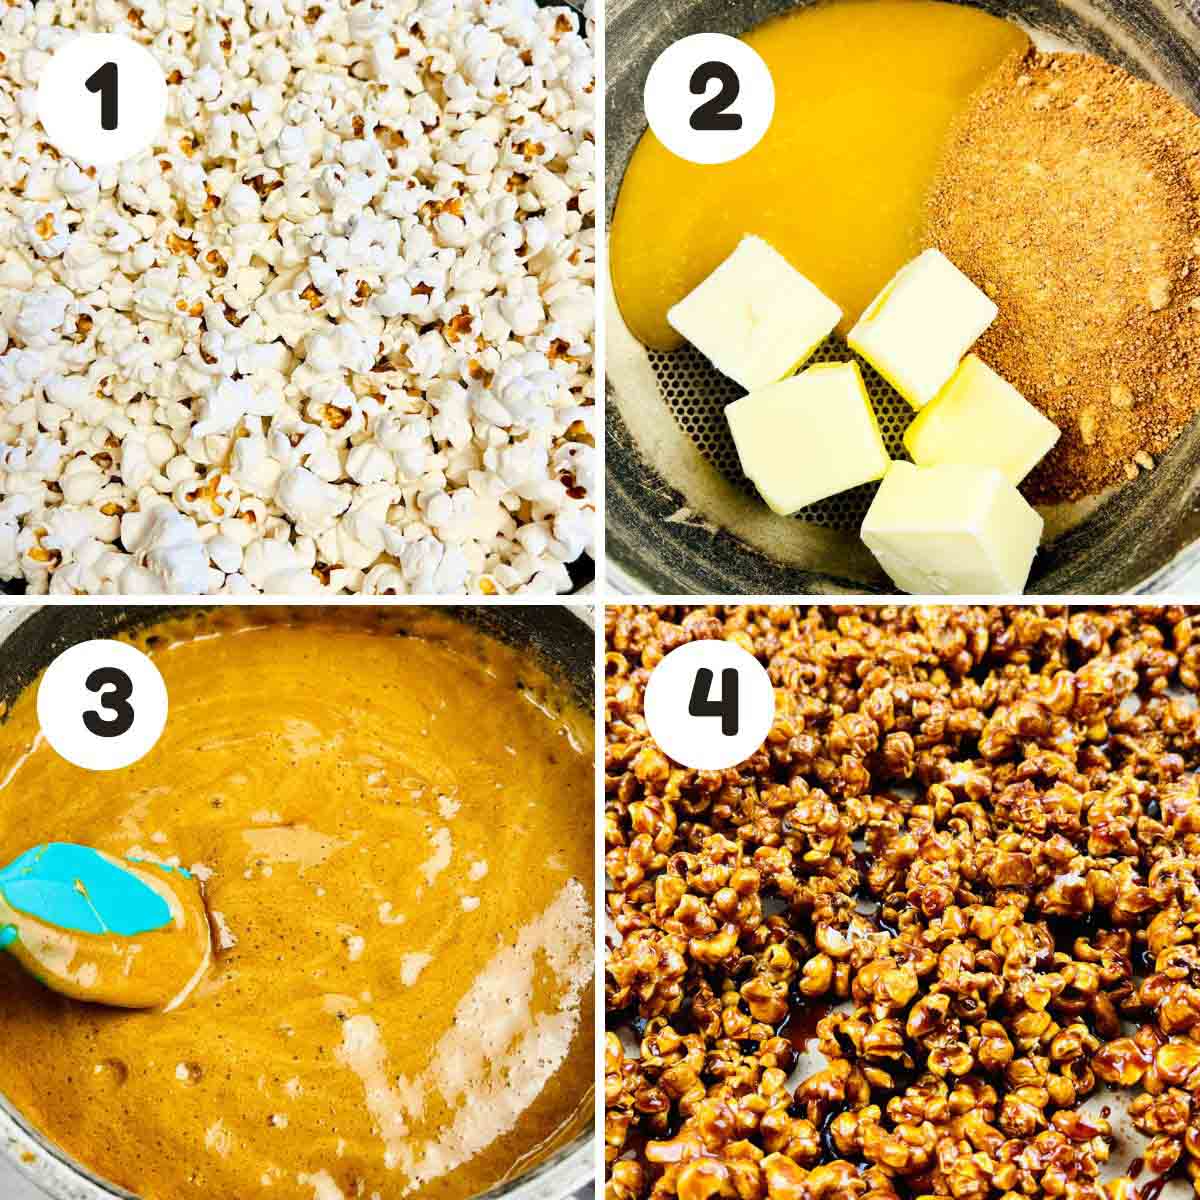 Steps to make the caramel popcorn.